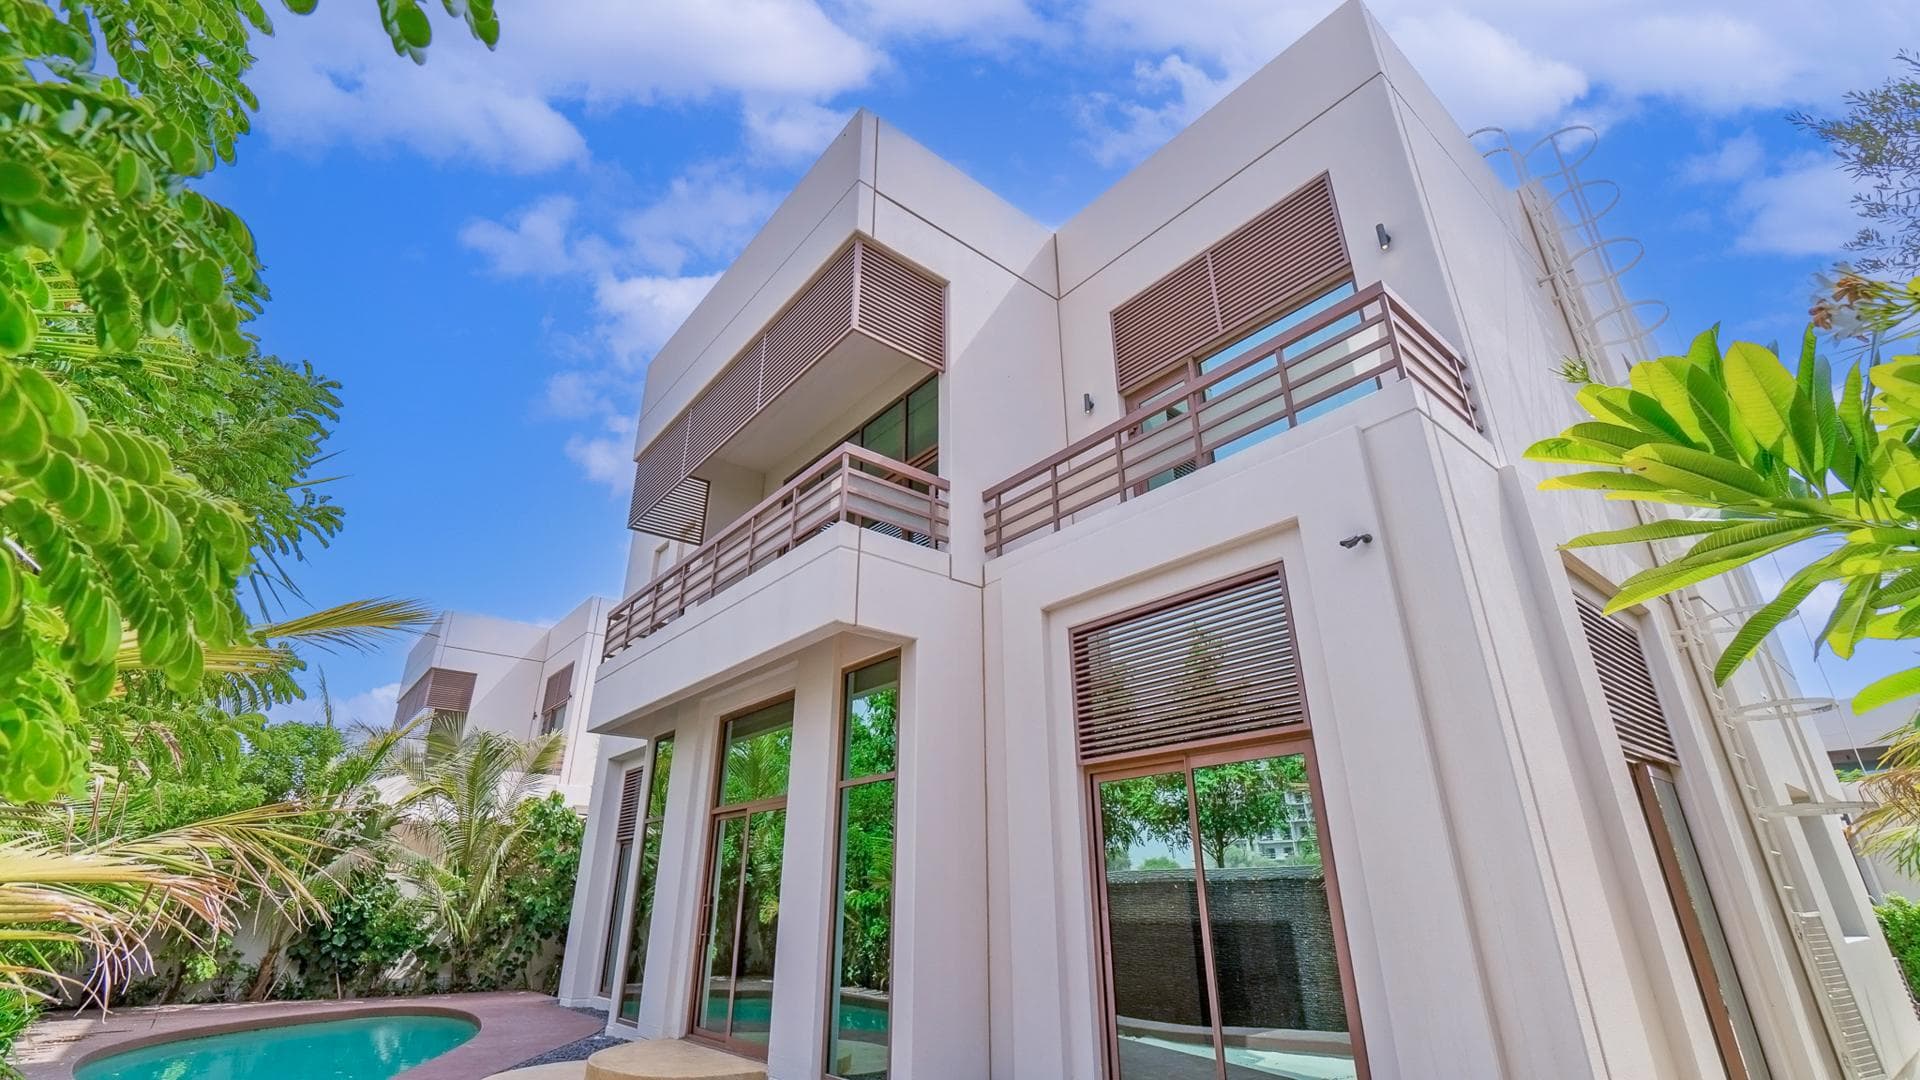 5 Bedroom Villa For Rent Meydan Gated Community Lp13586 B1574d9bd37a800.jpg